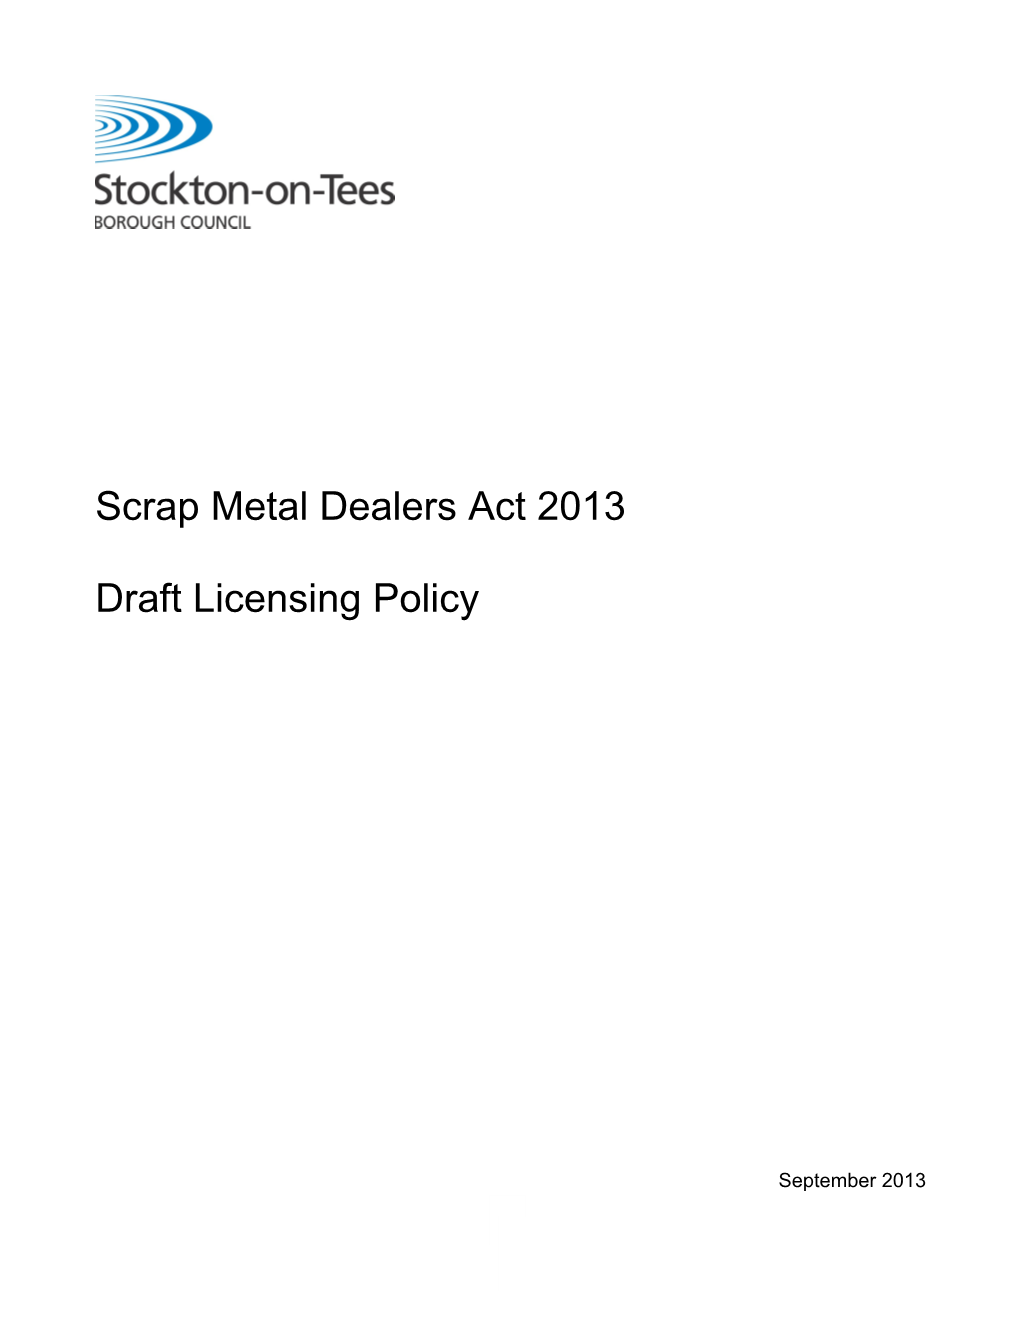 LGA Guide to the Scrap Metal Dealers Act 2013: Applications